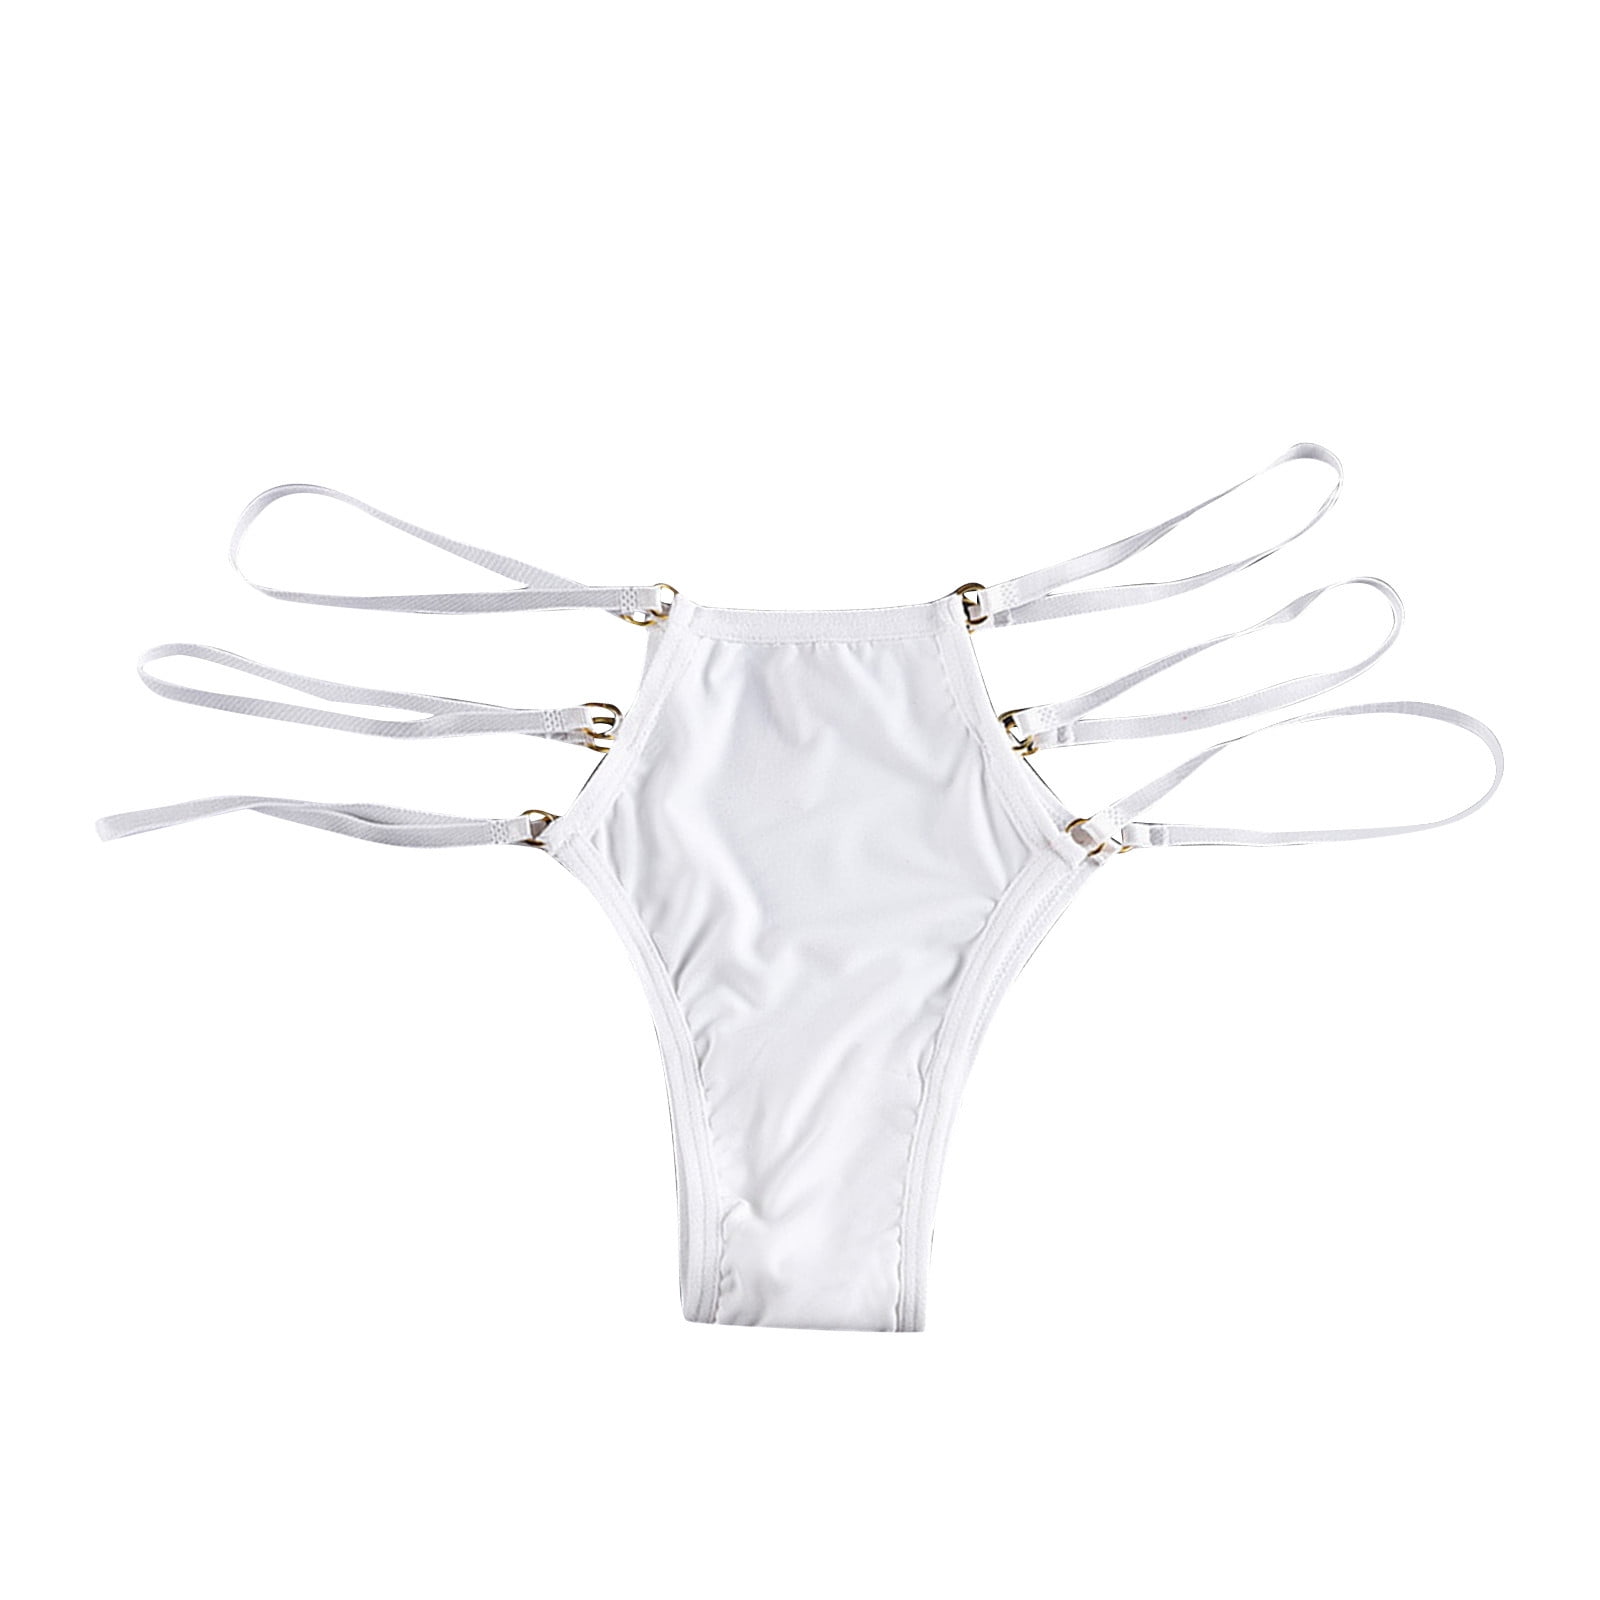 Plus Size Underwear For Women Invisible No Show Nylon Sp Ex Panties White M  